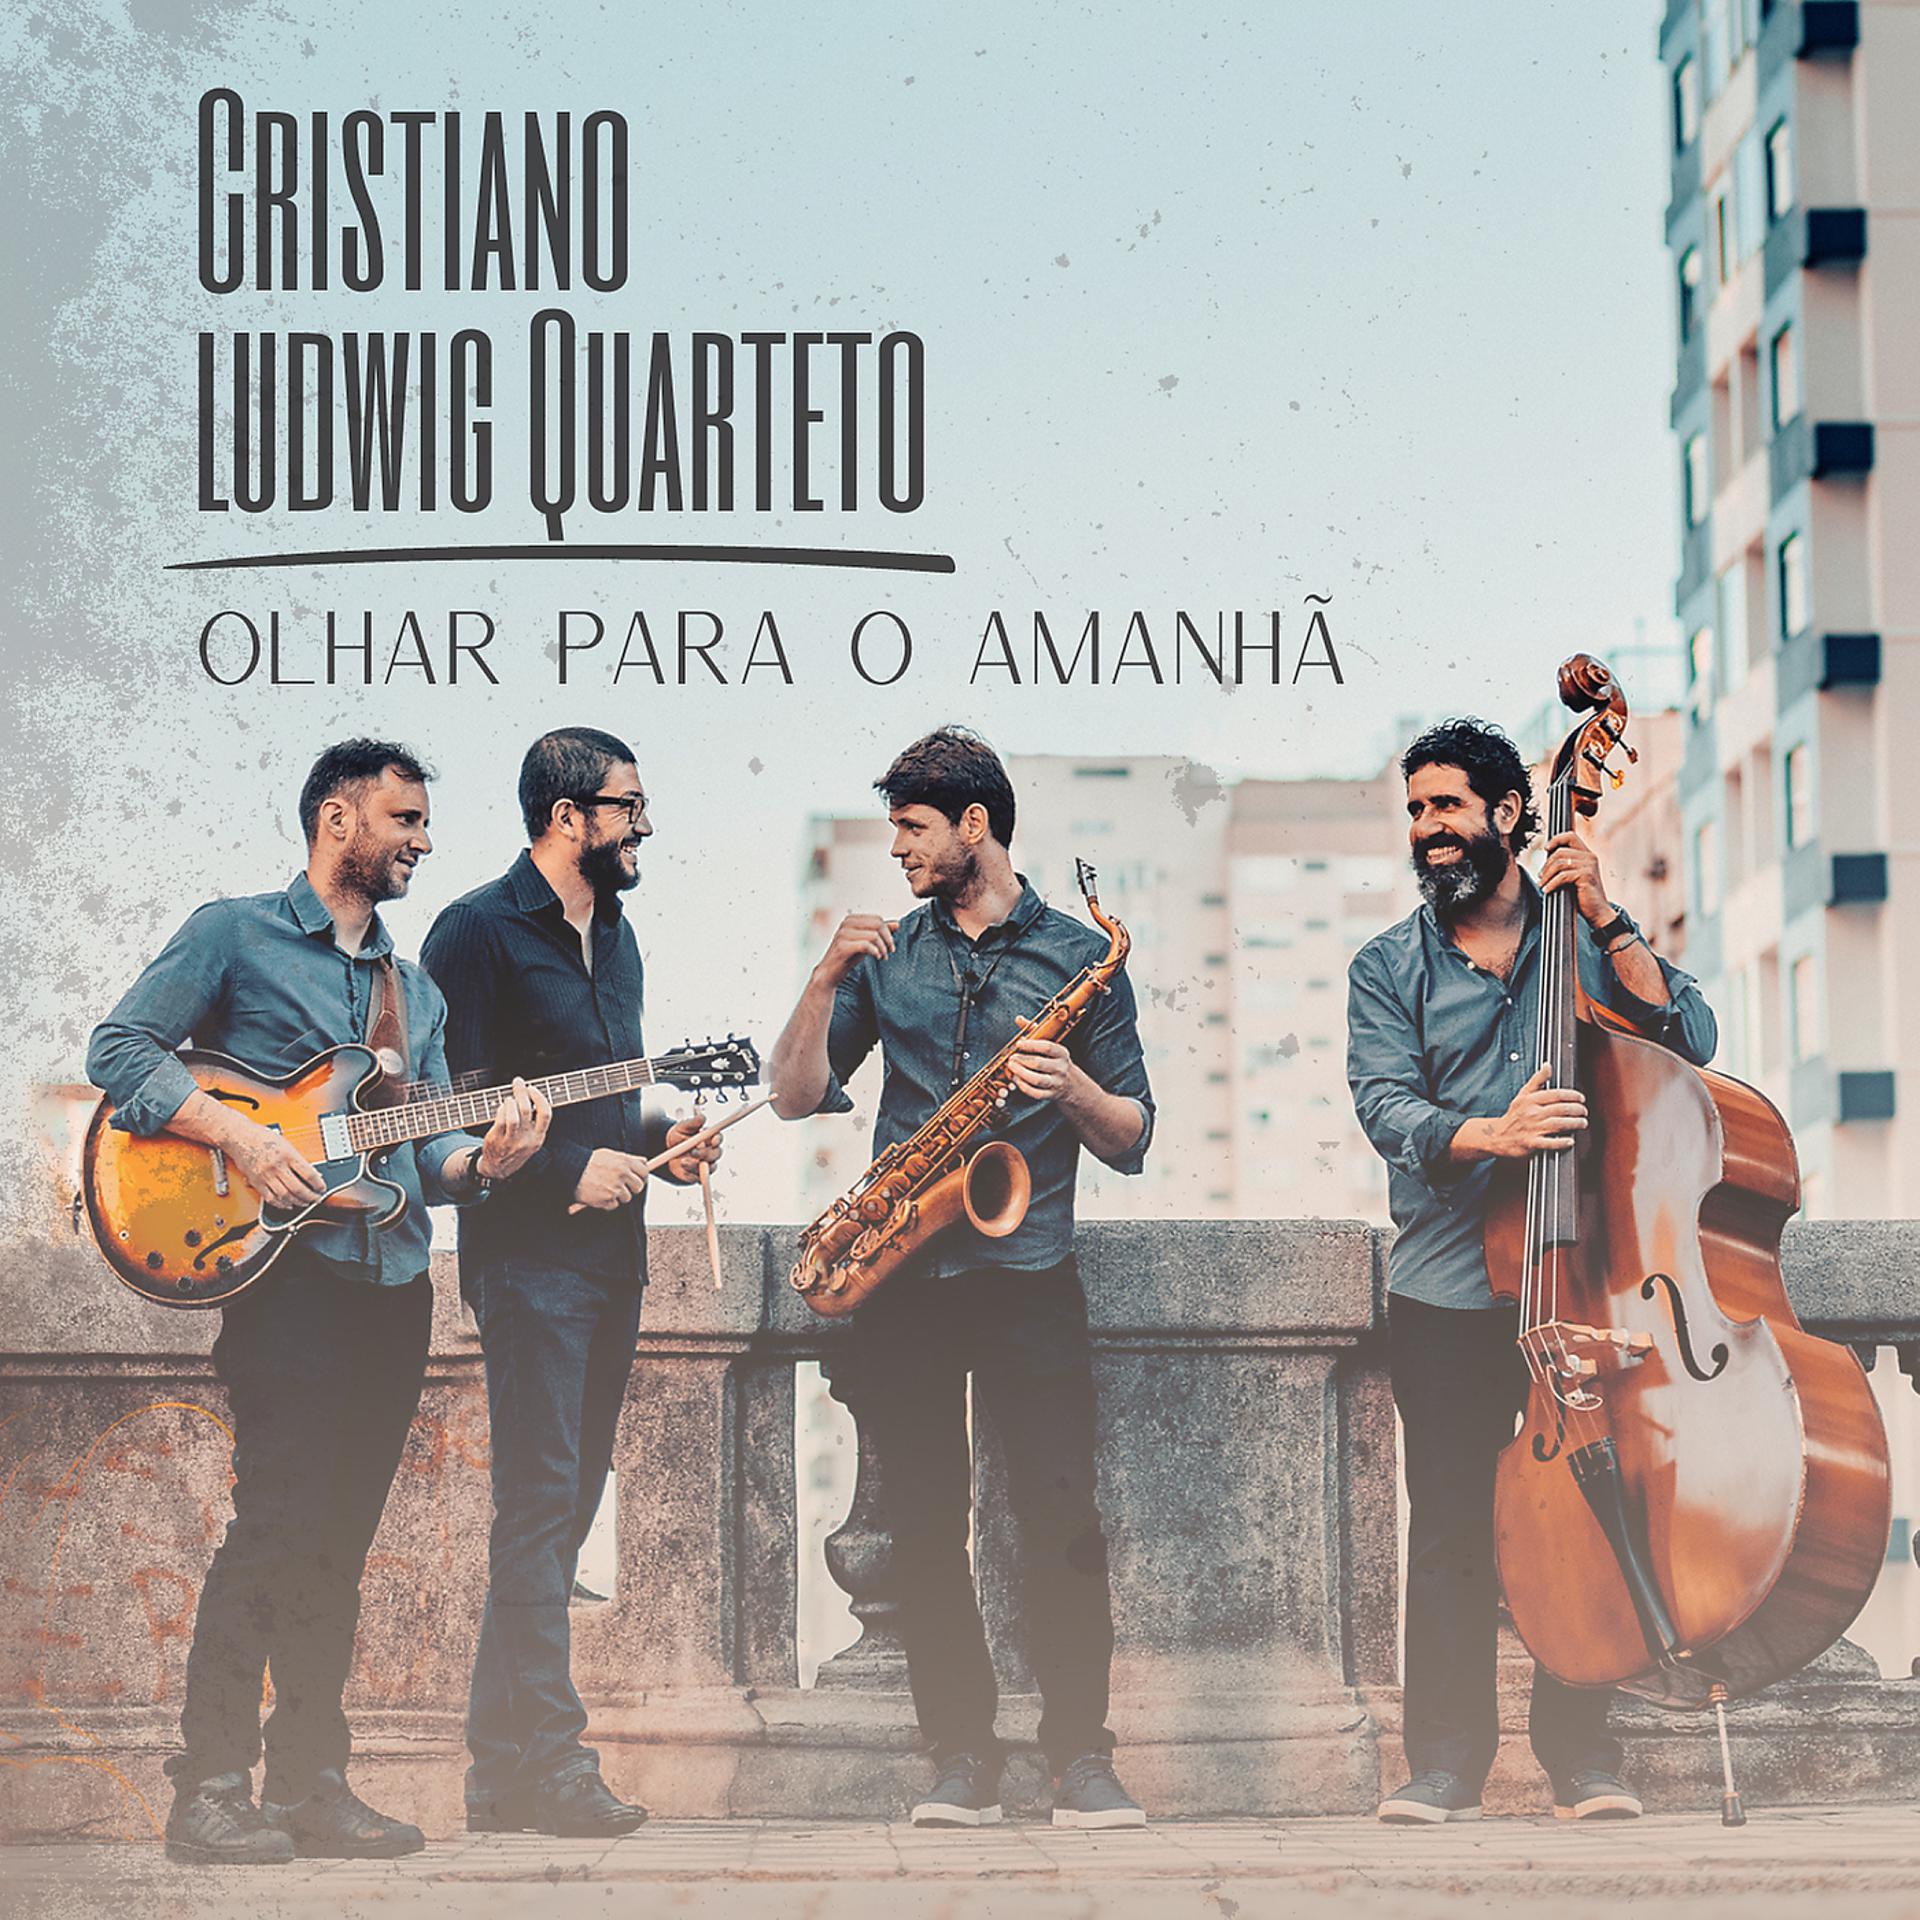 Cristiano Ludwig Quarteto - фото